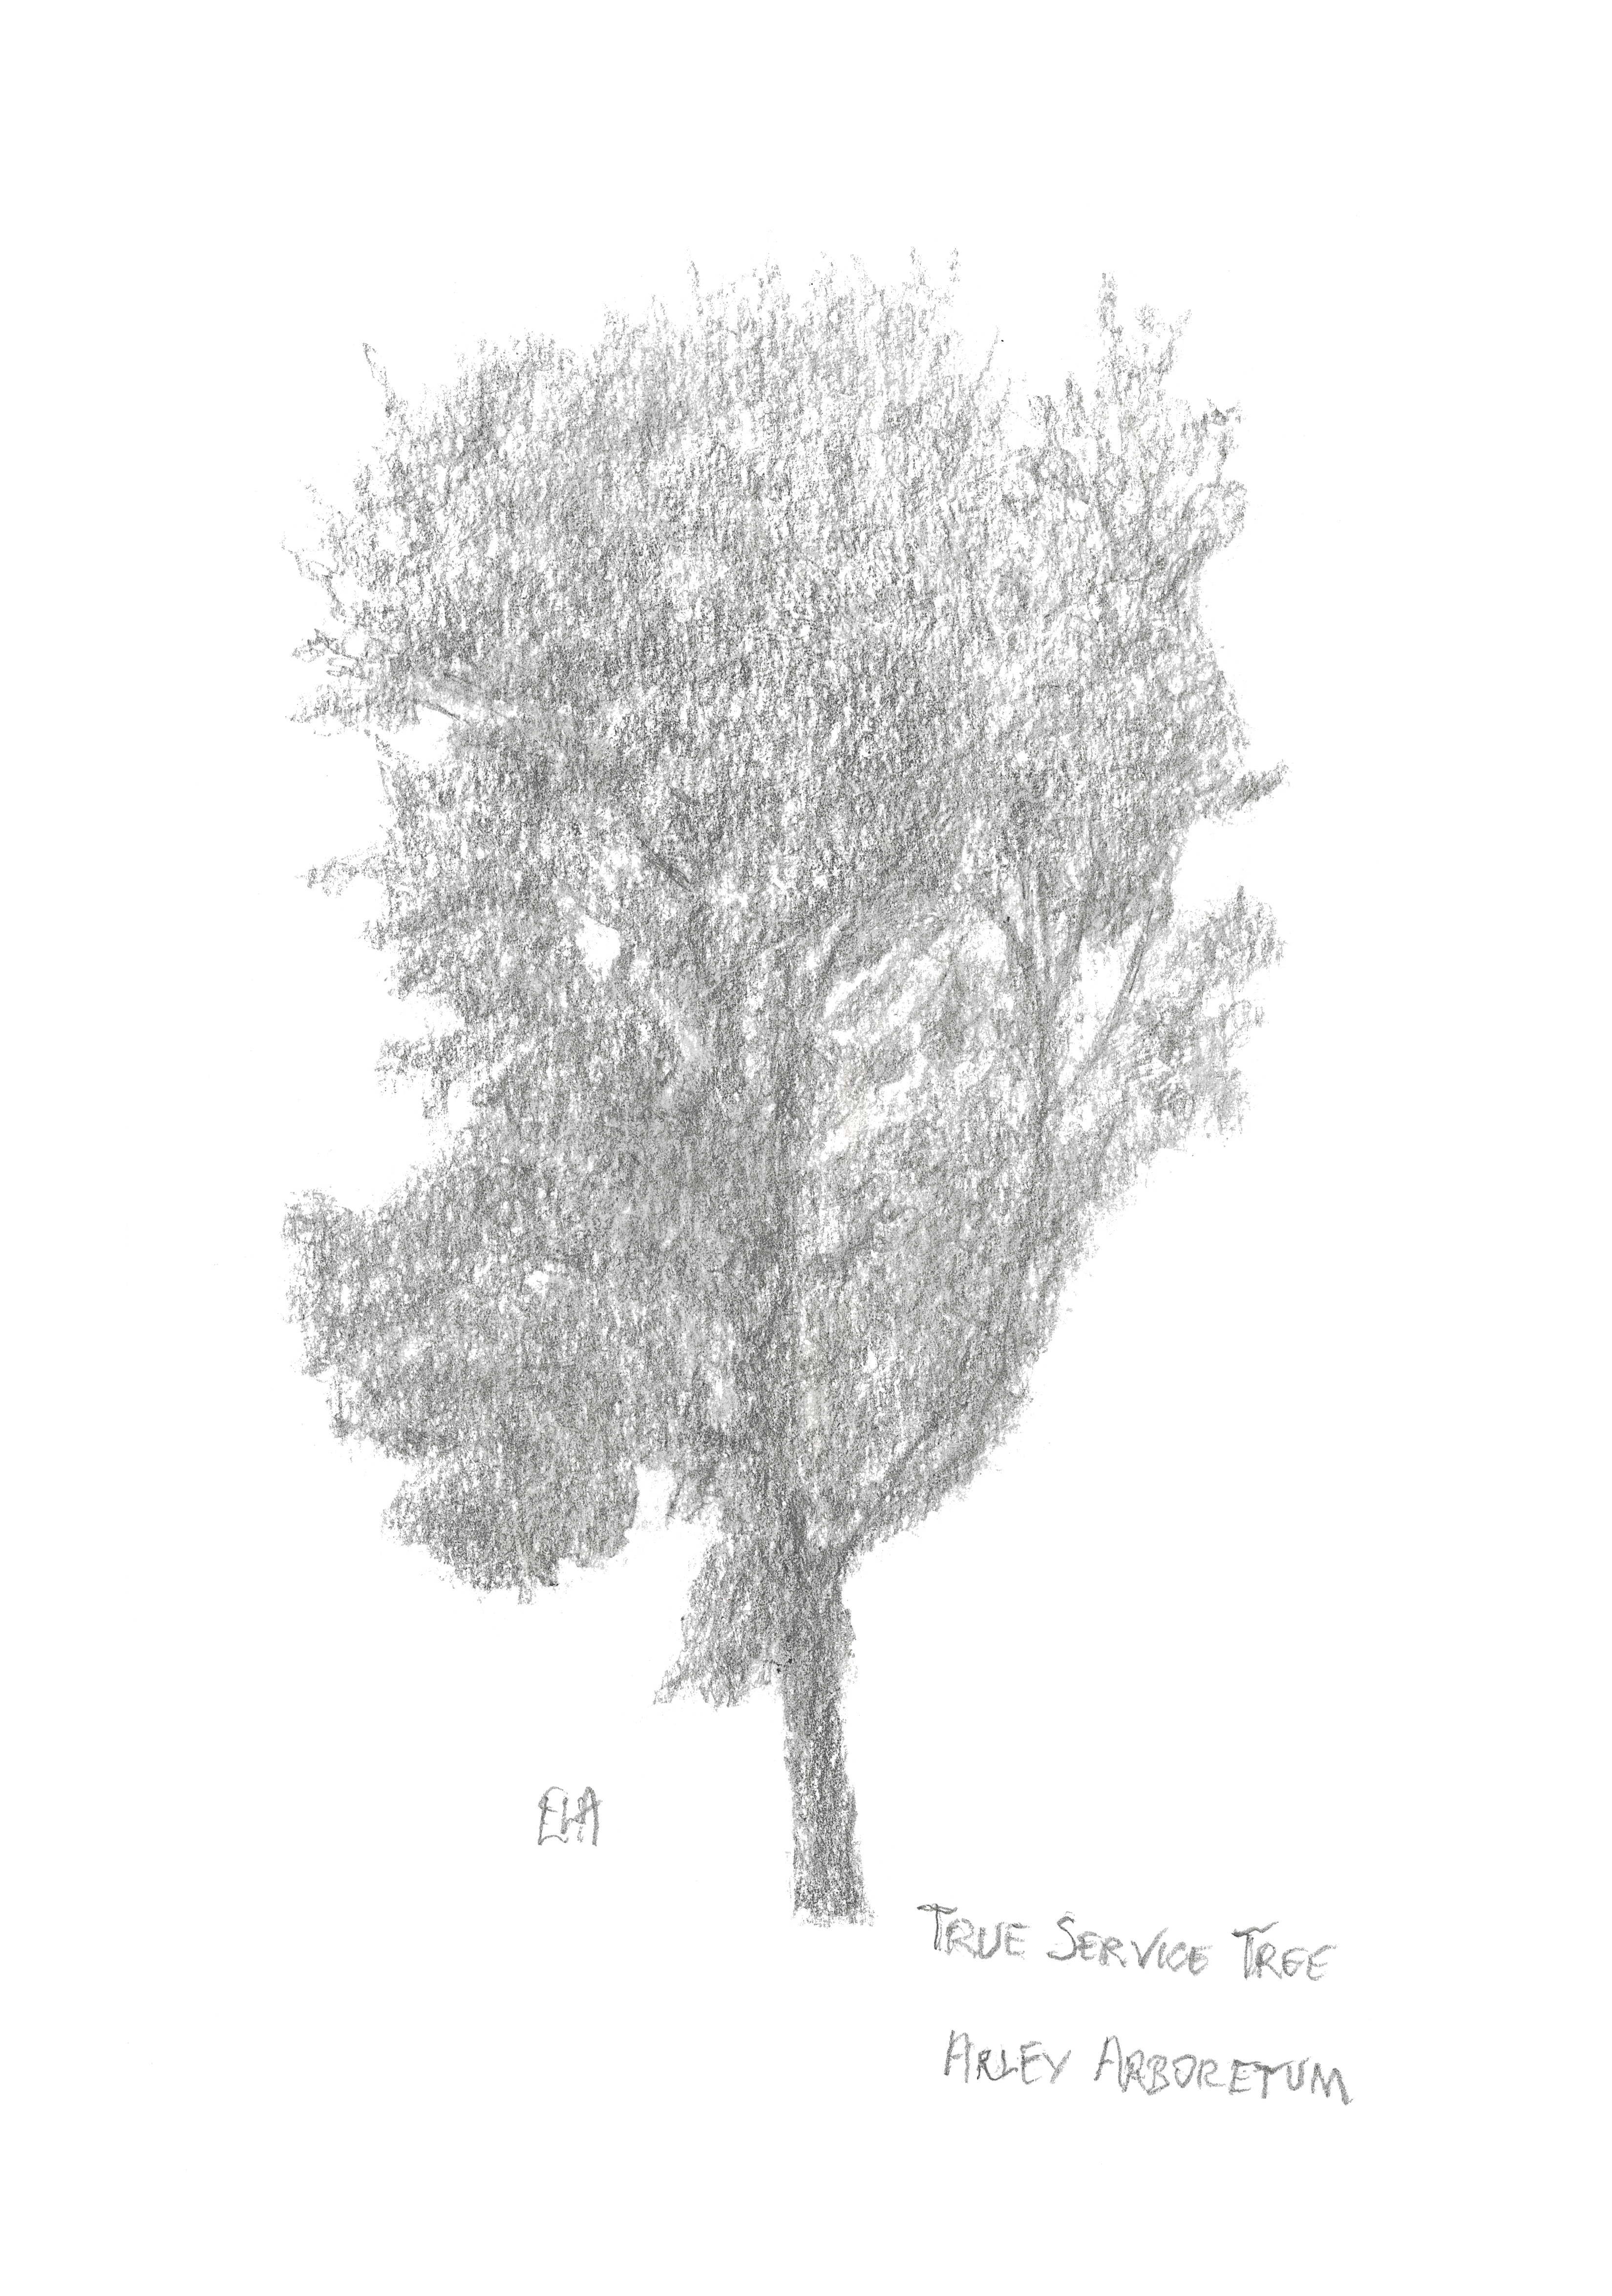 E4 True Service Tree Arley Arboretum hi res.jpg